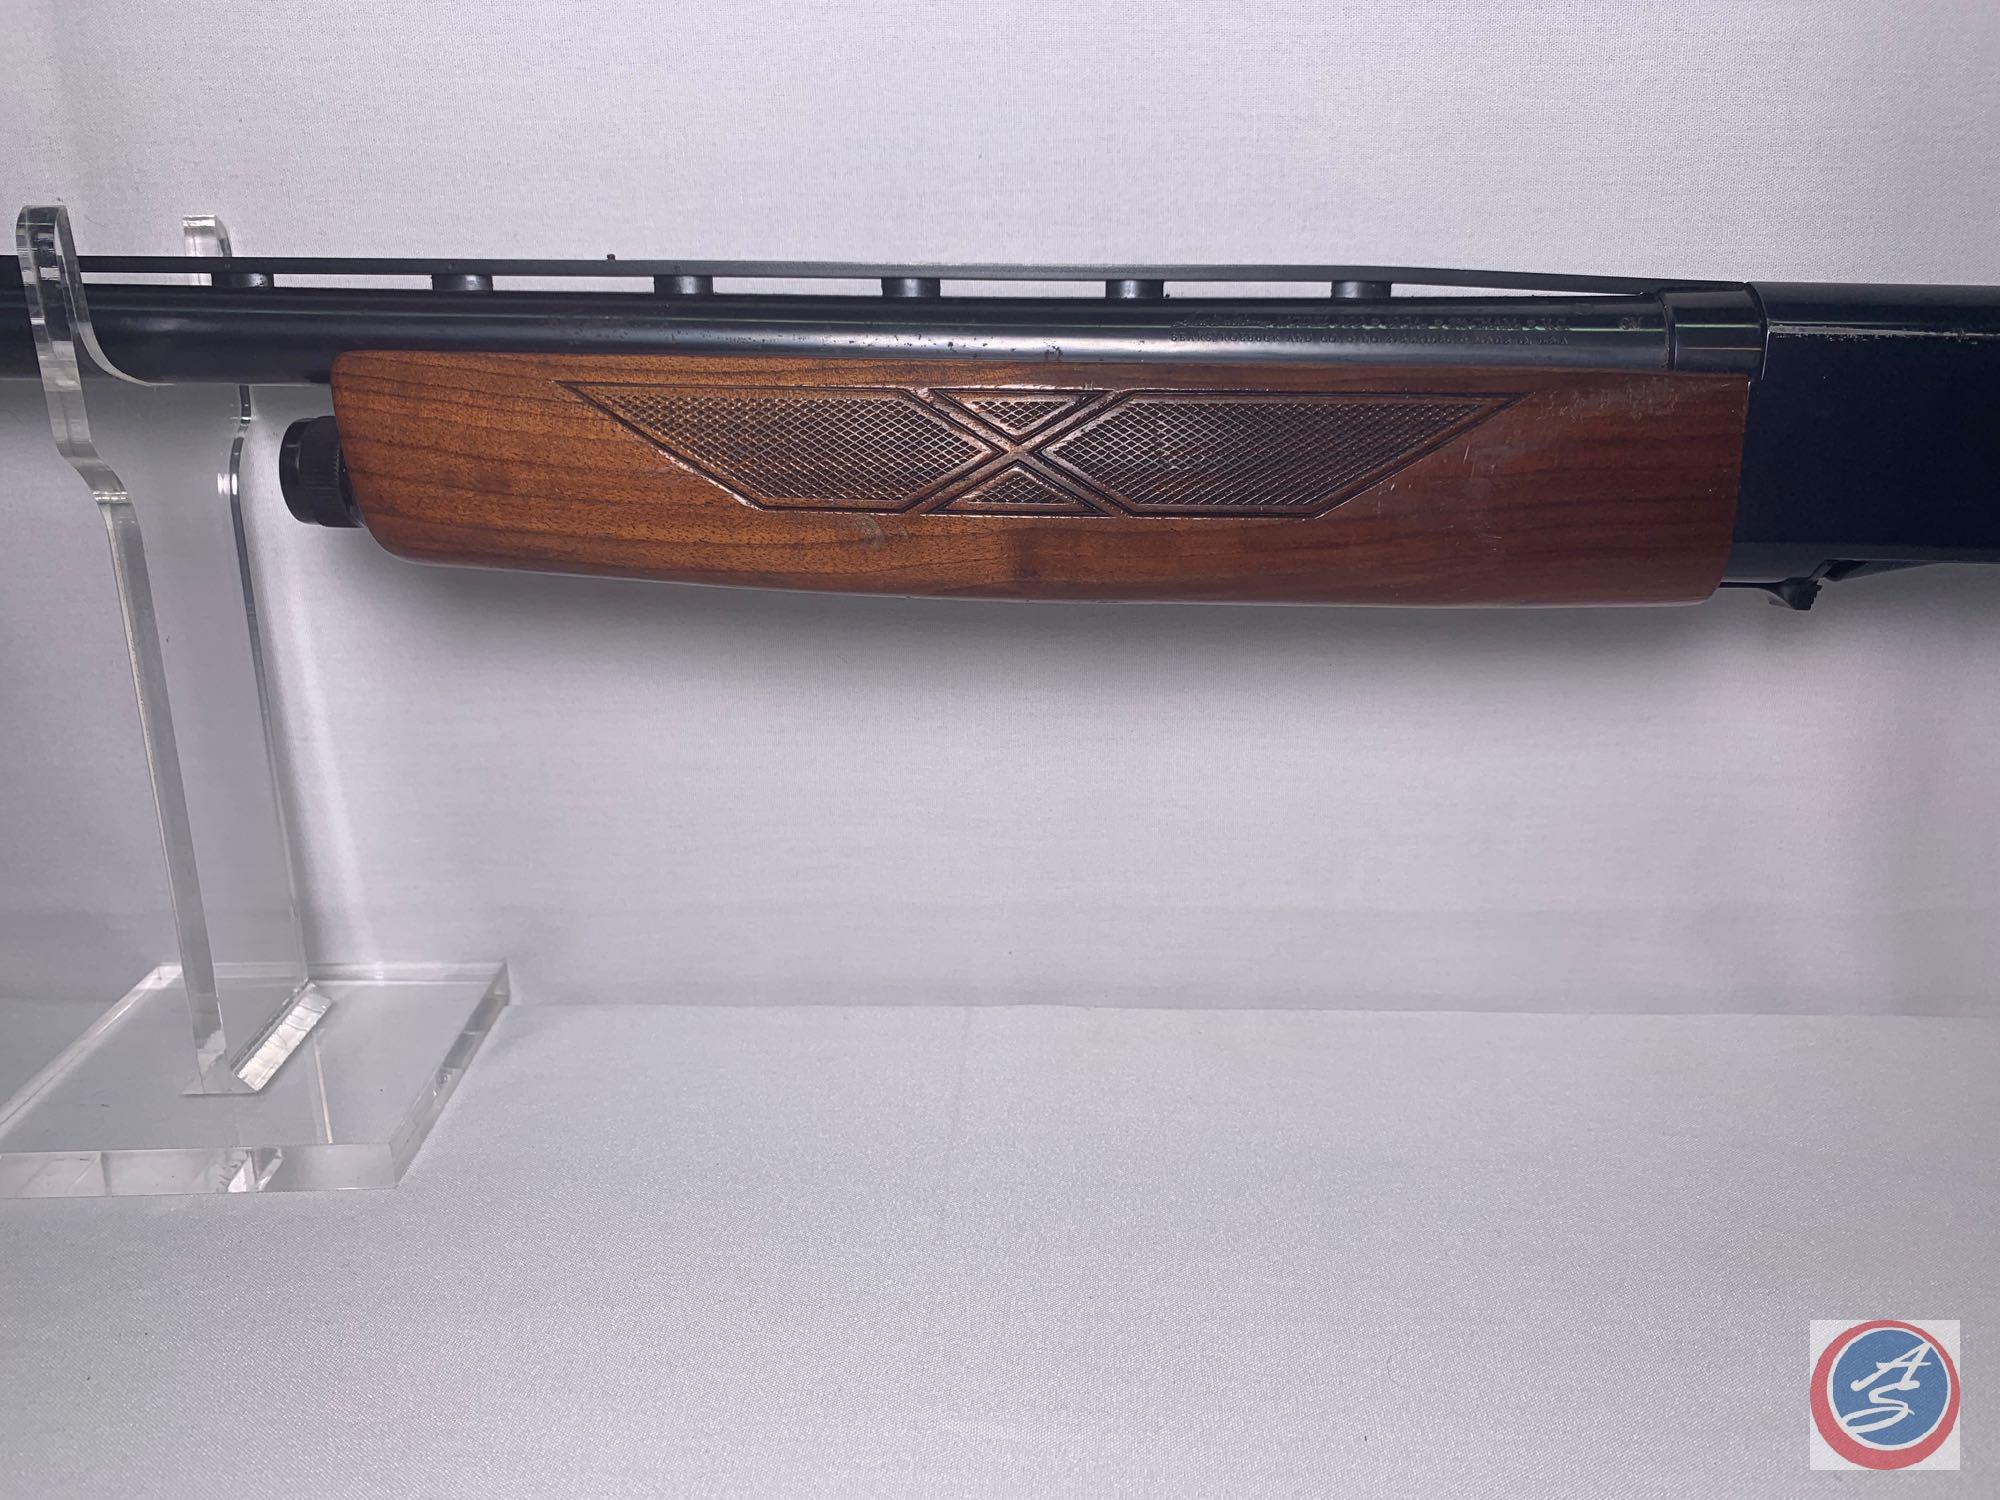 Ted Williams Model M300 12 GA Shotgun Semi Auto Shotgun with 27 inch vent rib barrel with poly